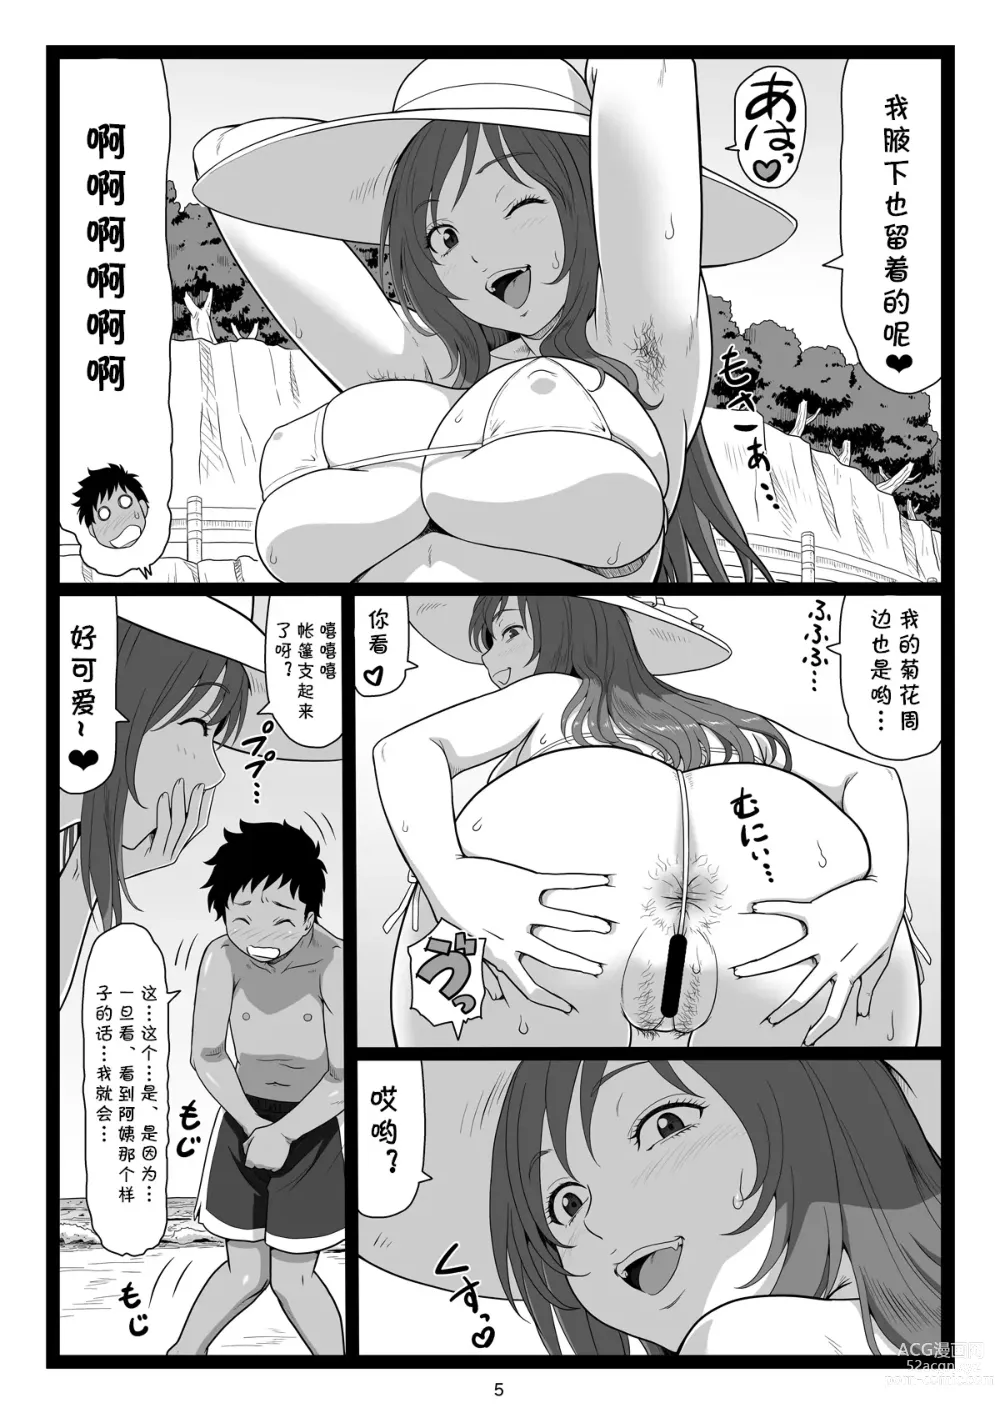 Page 5 of doujinshi Natsuyasumi no Omoide Gekan